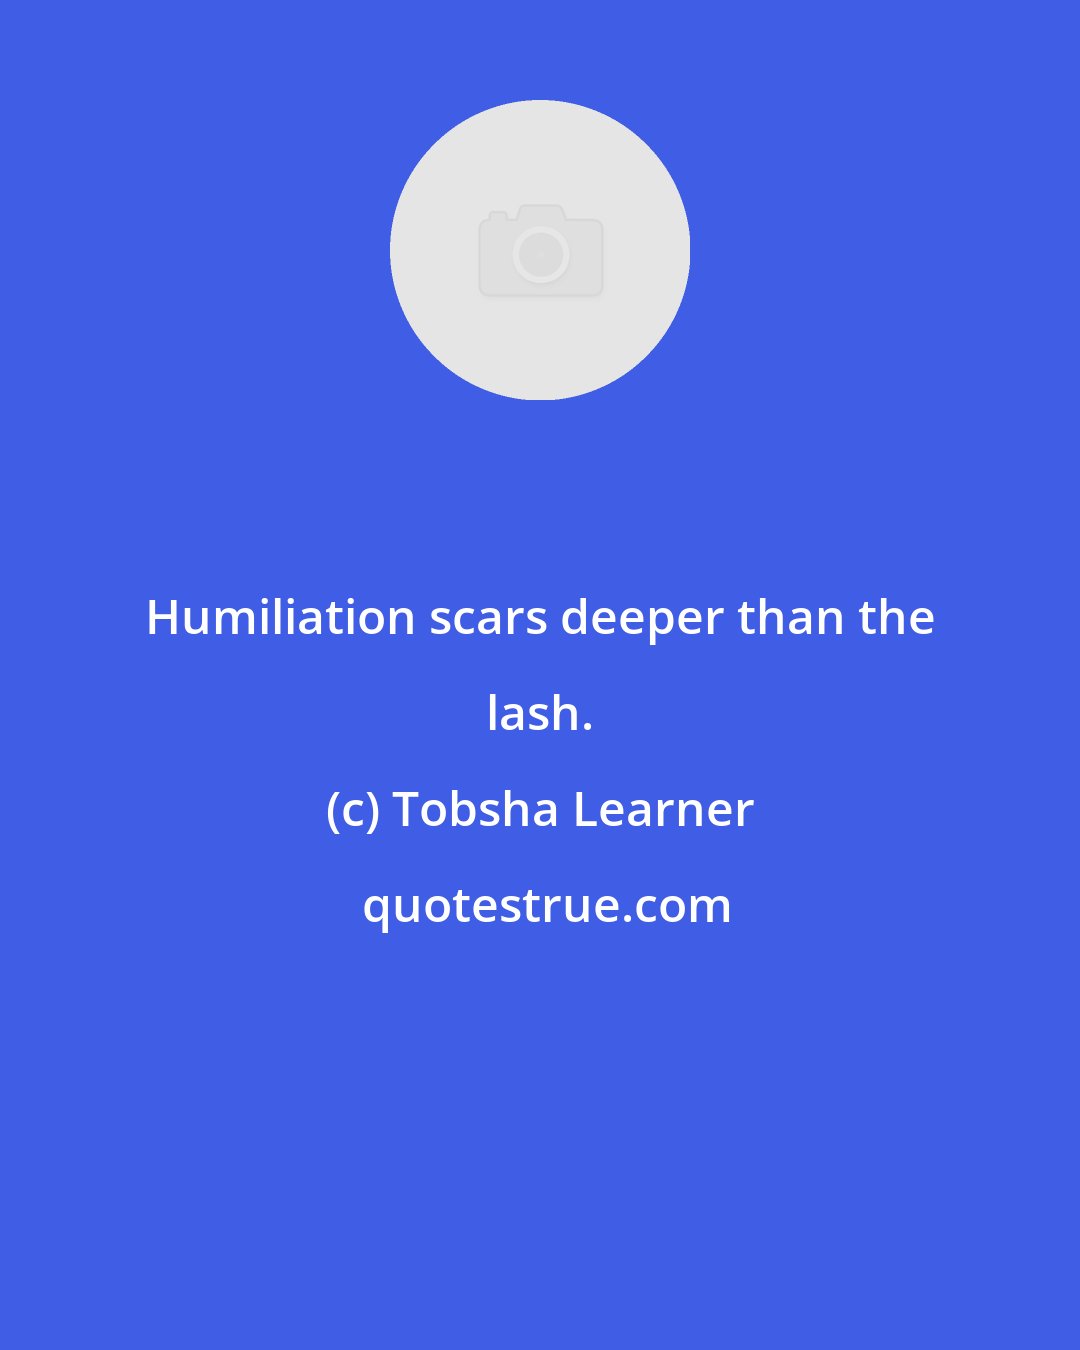 Tobsha Learner: Humiliation scars deeper than the lash.